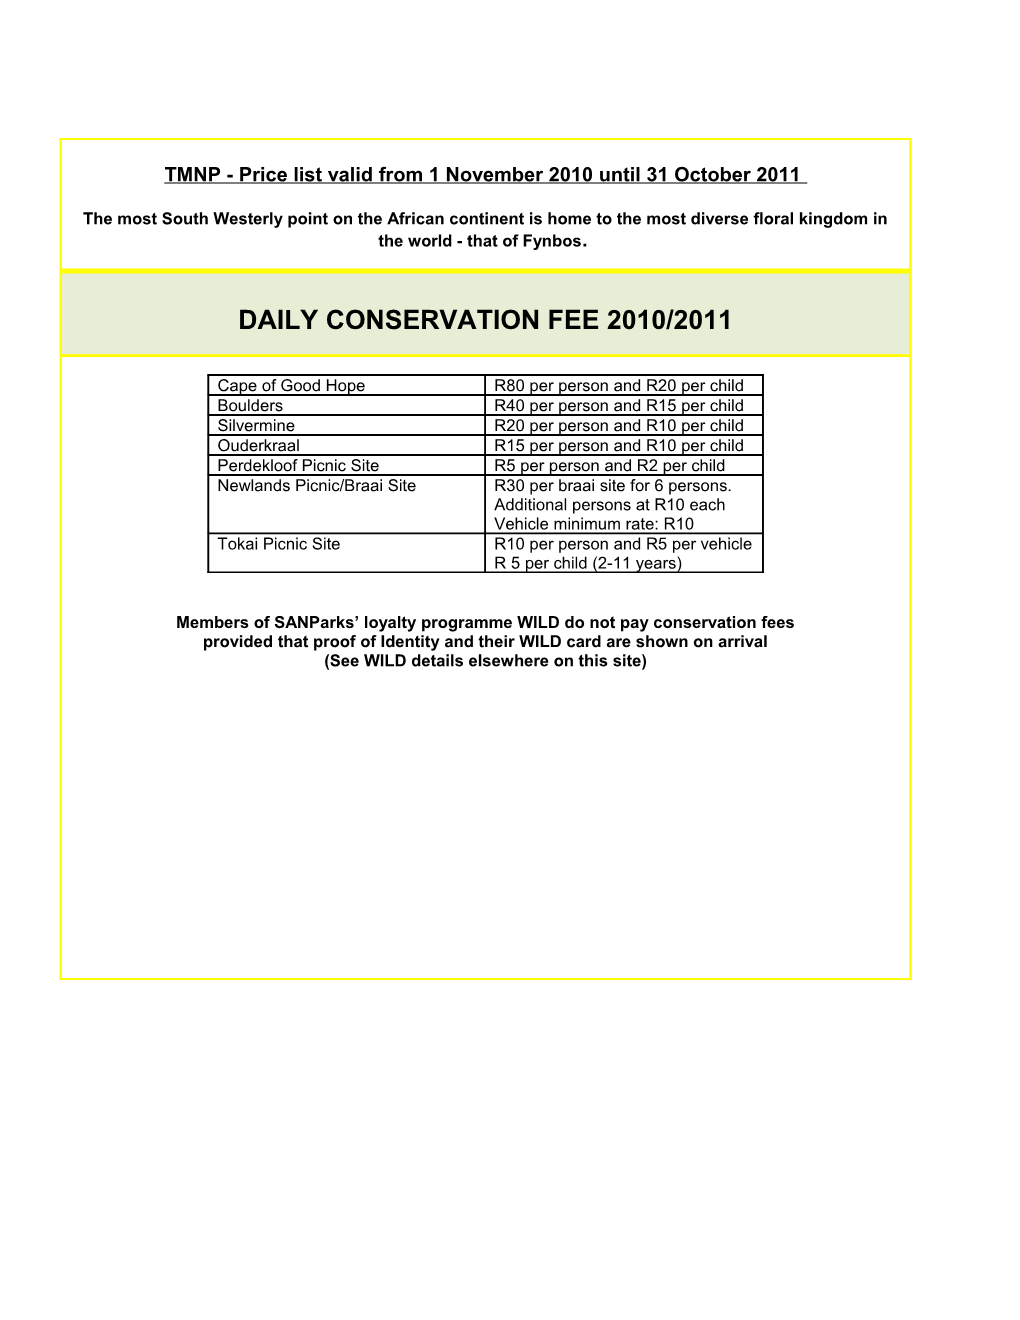 TMNP - Price List Valid from 1 September 2009 Until 31 October 2010